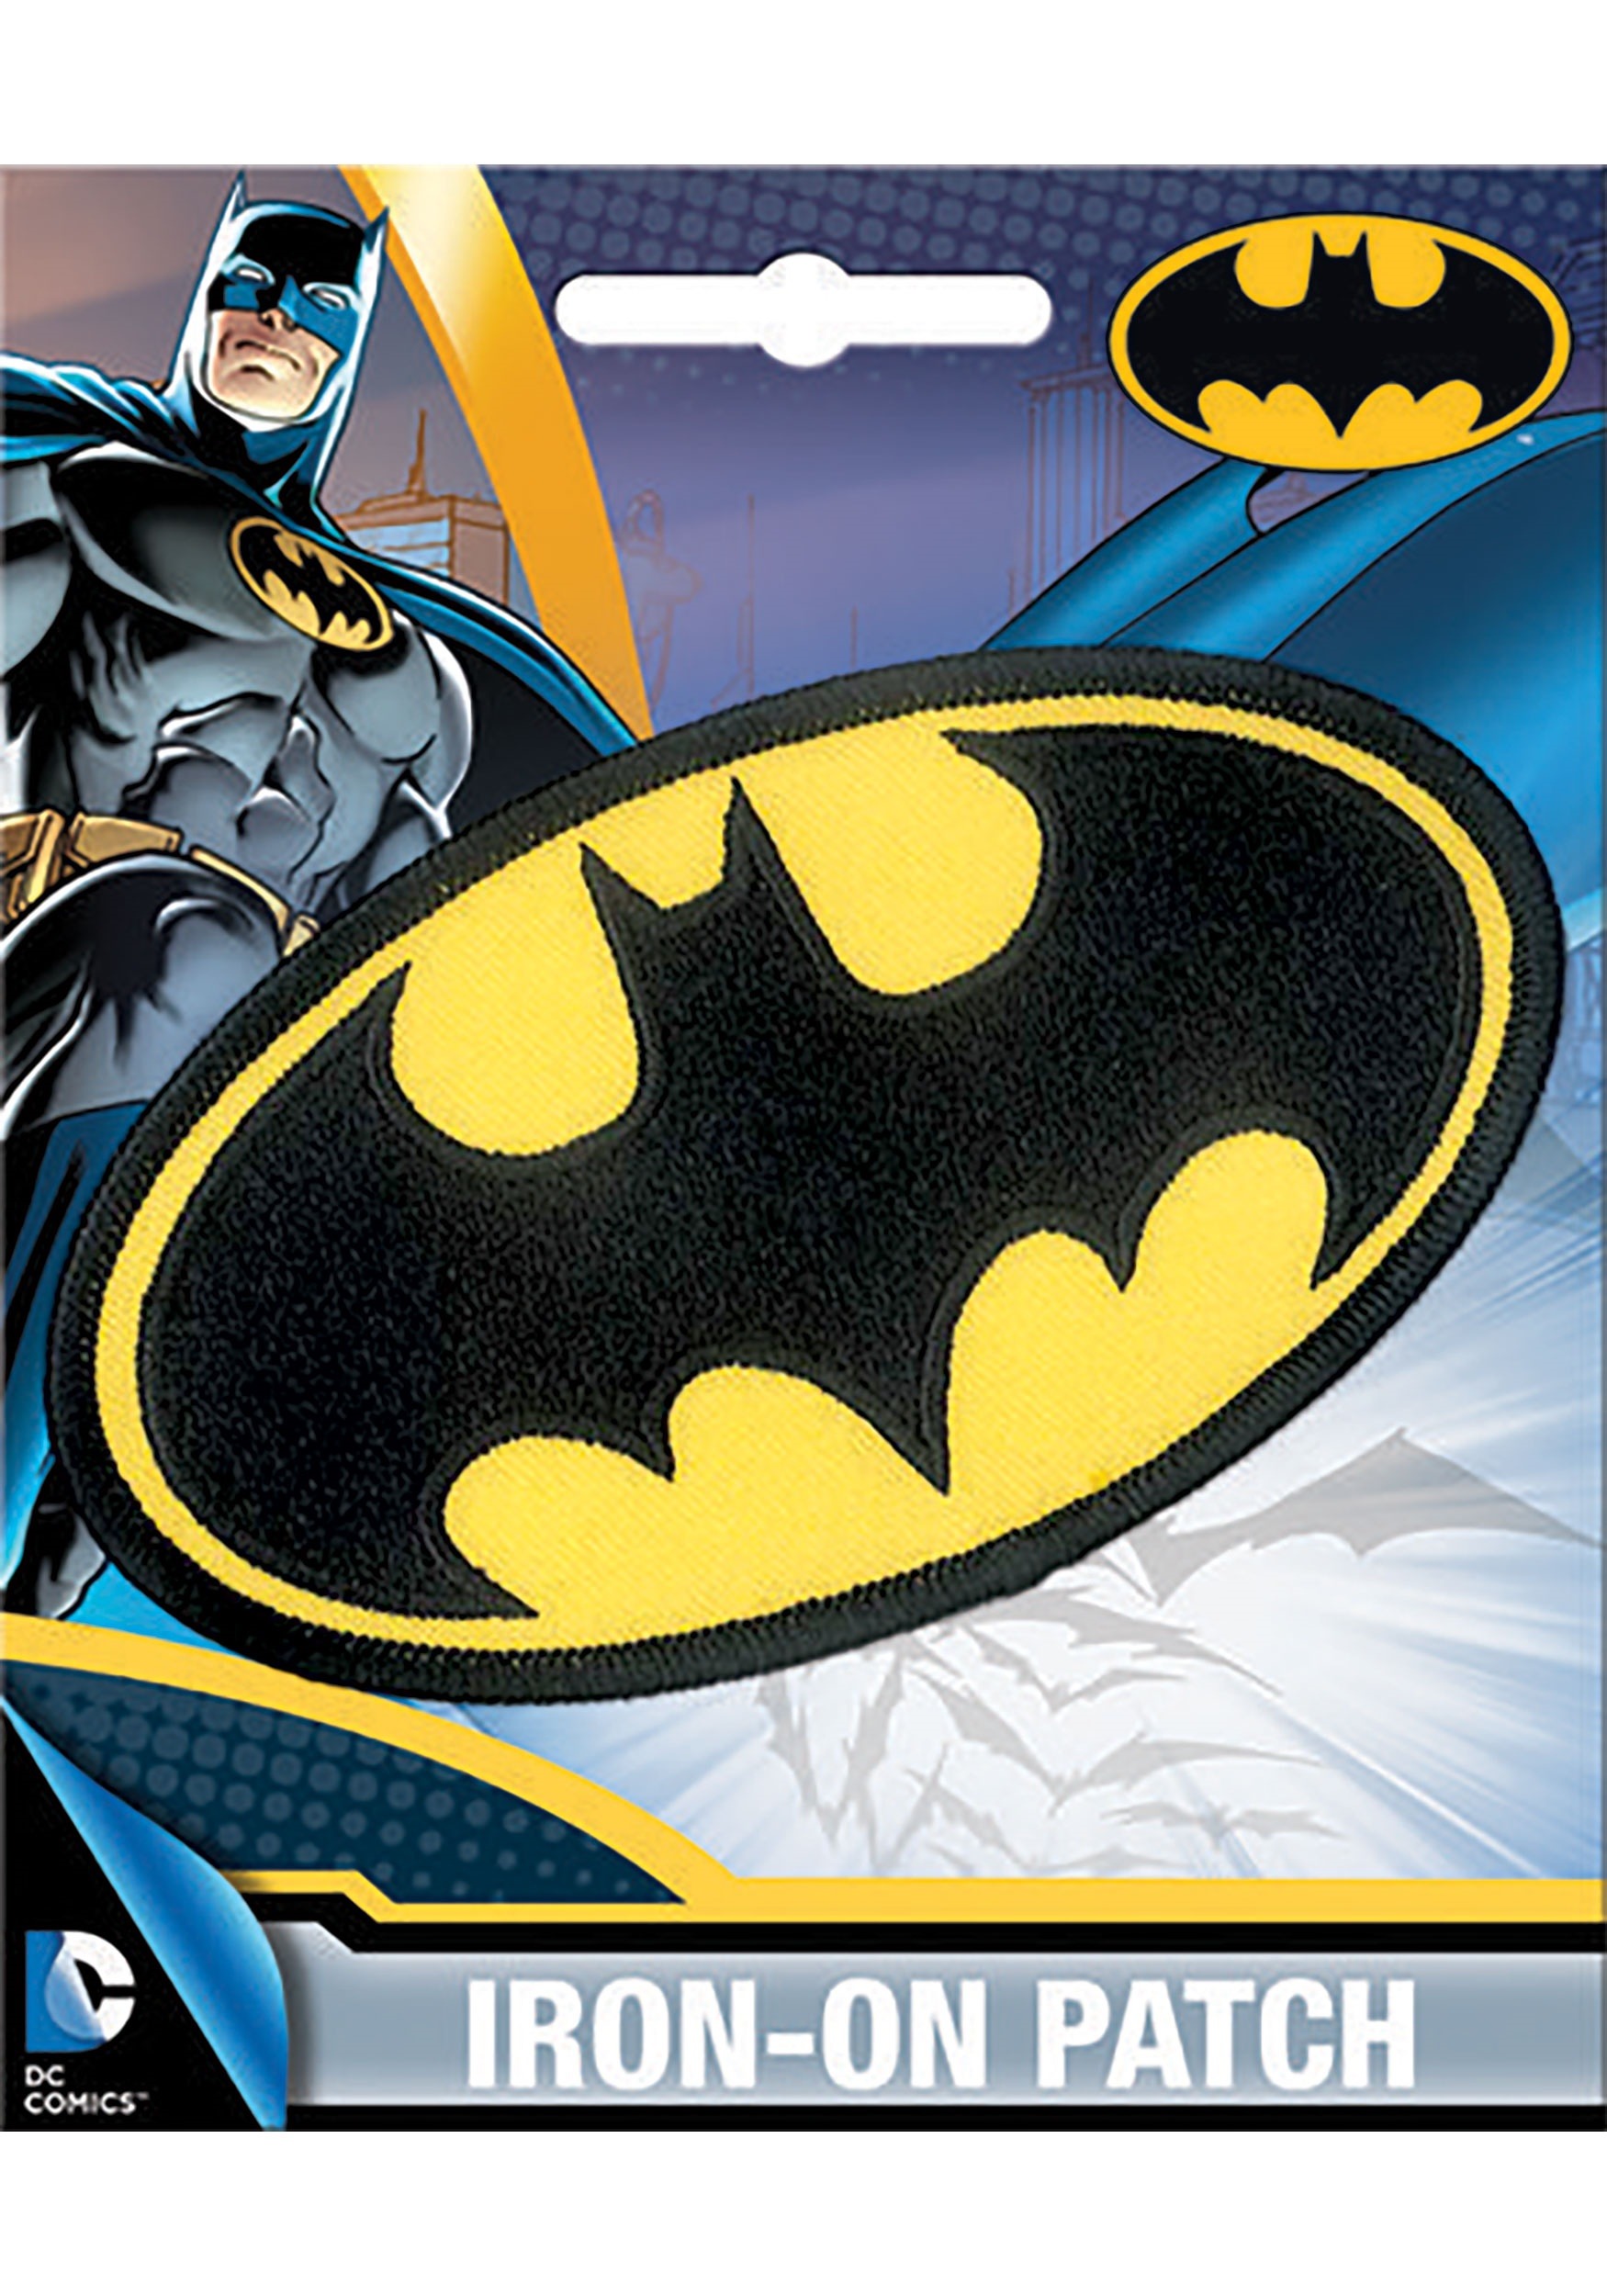 Iron-On DC Comics Batman Patch